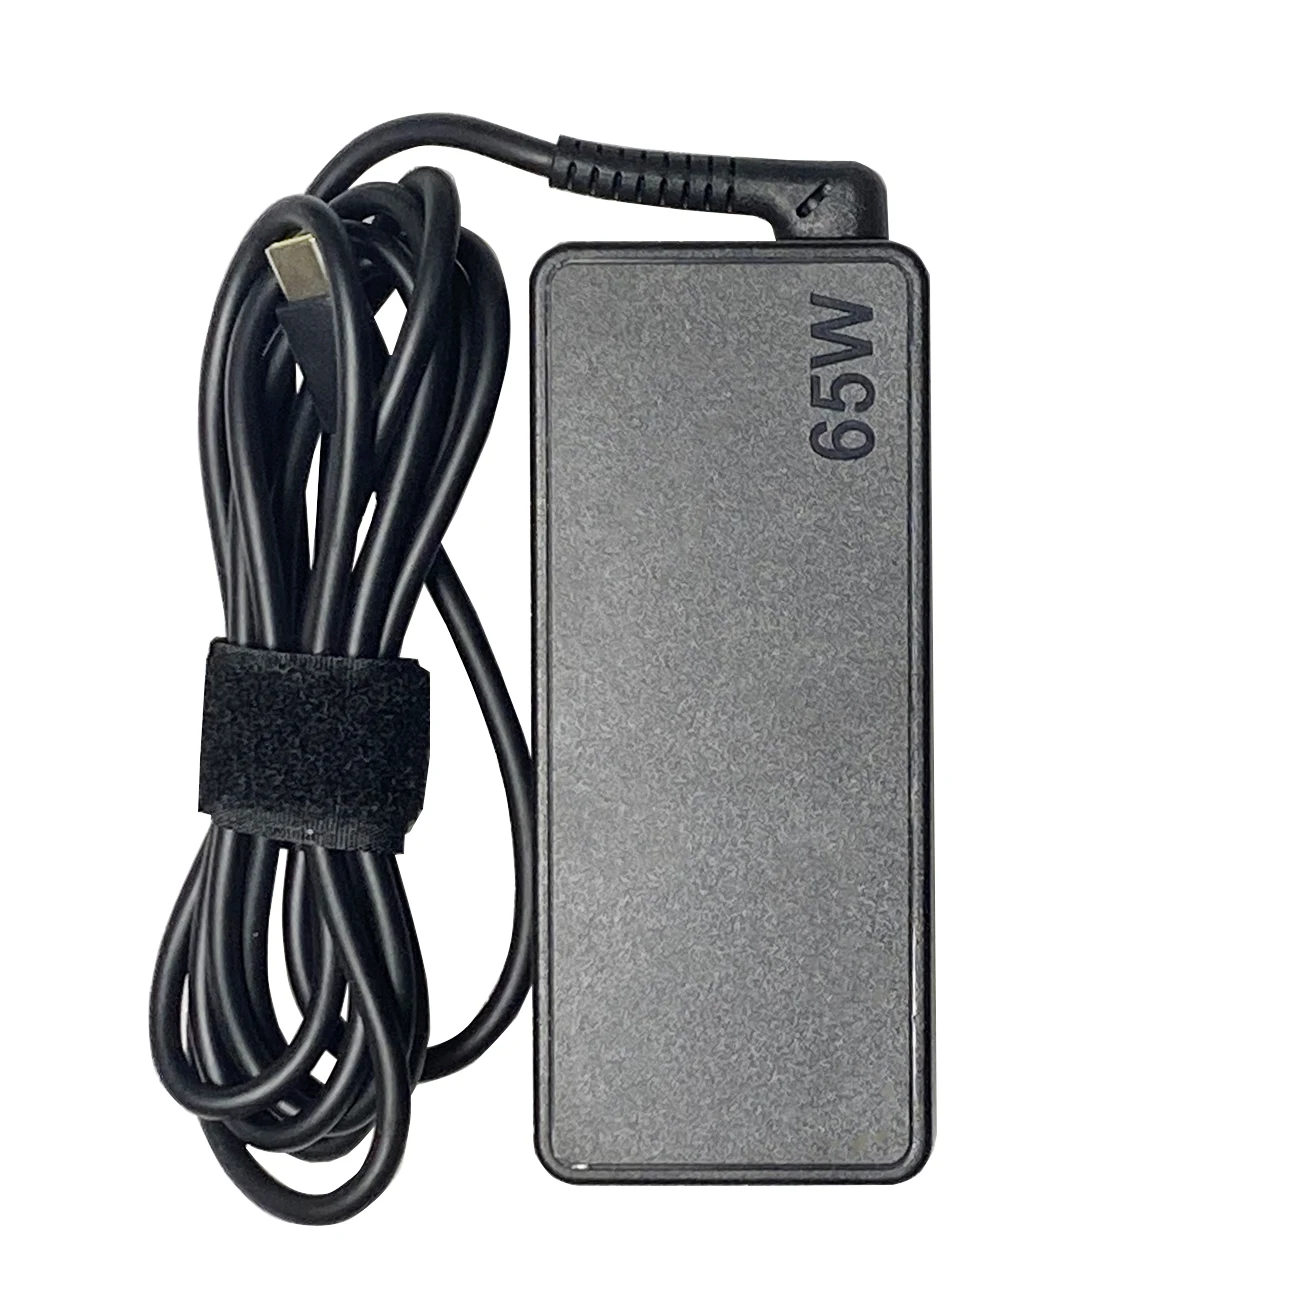 original 65w 20v 3 25a type c ac adapter laptop charger for lenovo thinkpad t480 t480s t580 x280 x380 e580 l380 l480 15v 3a free global shipping